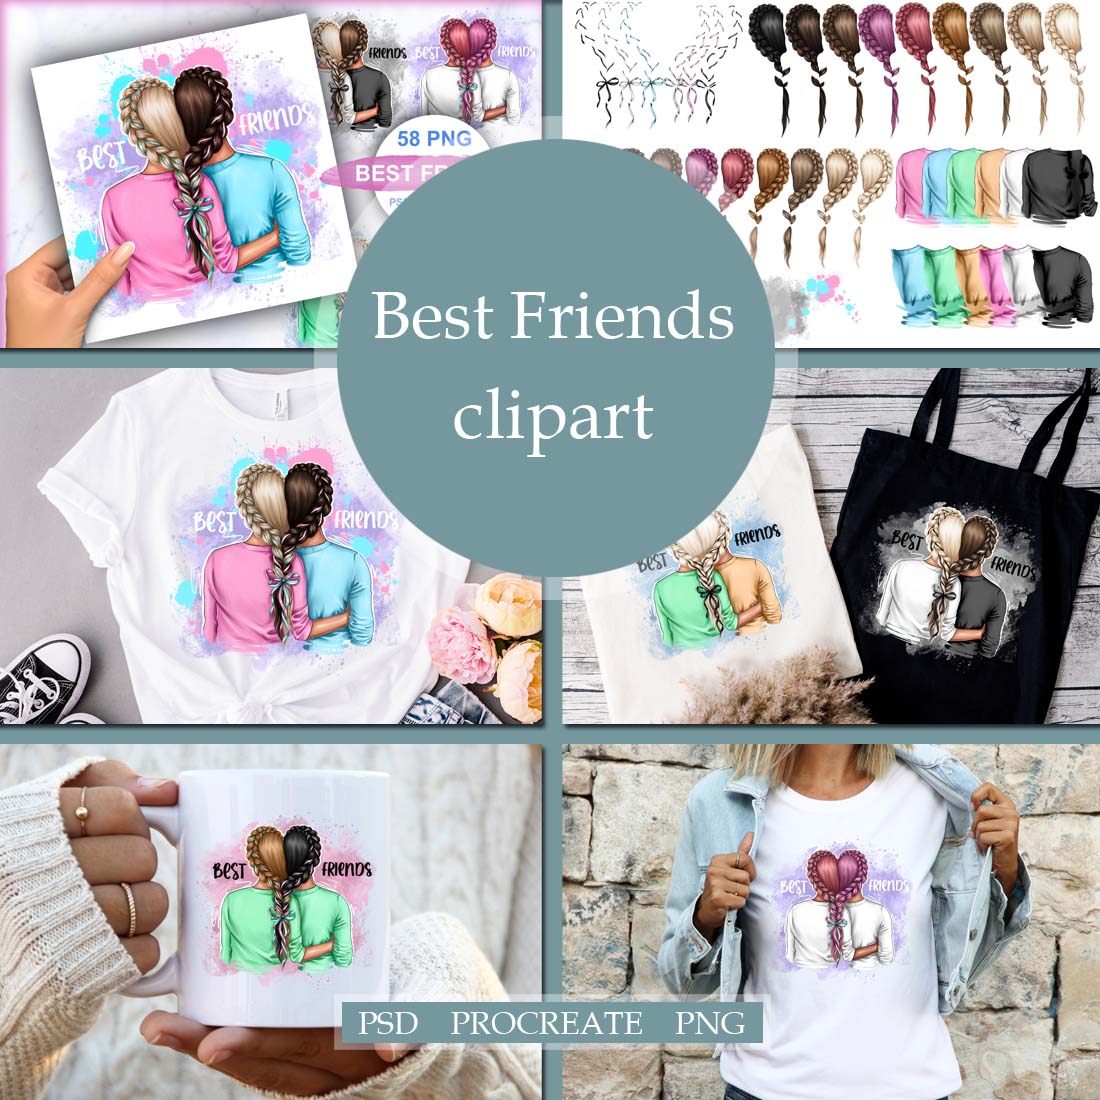 Best Friend Clipart cover image